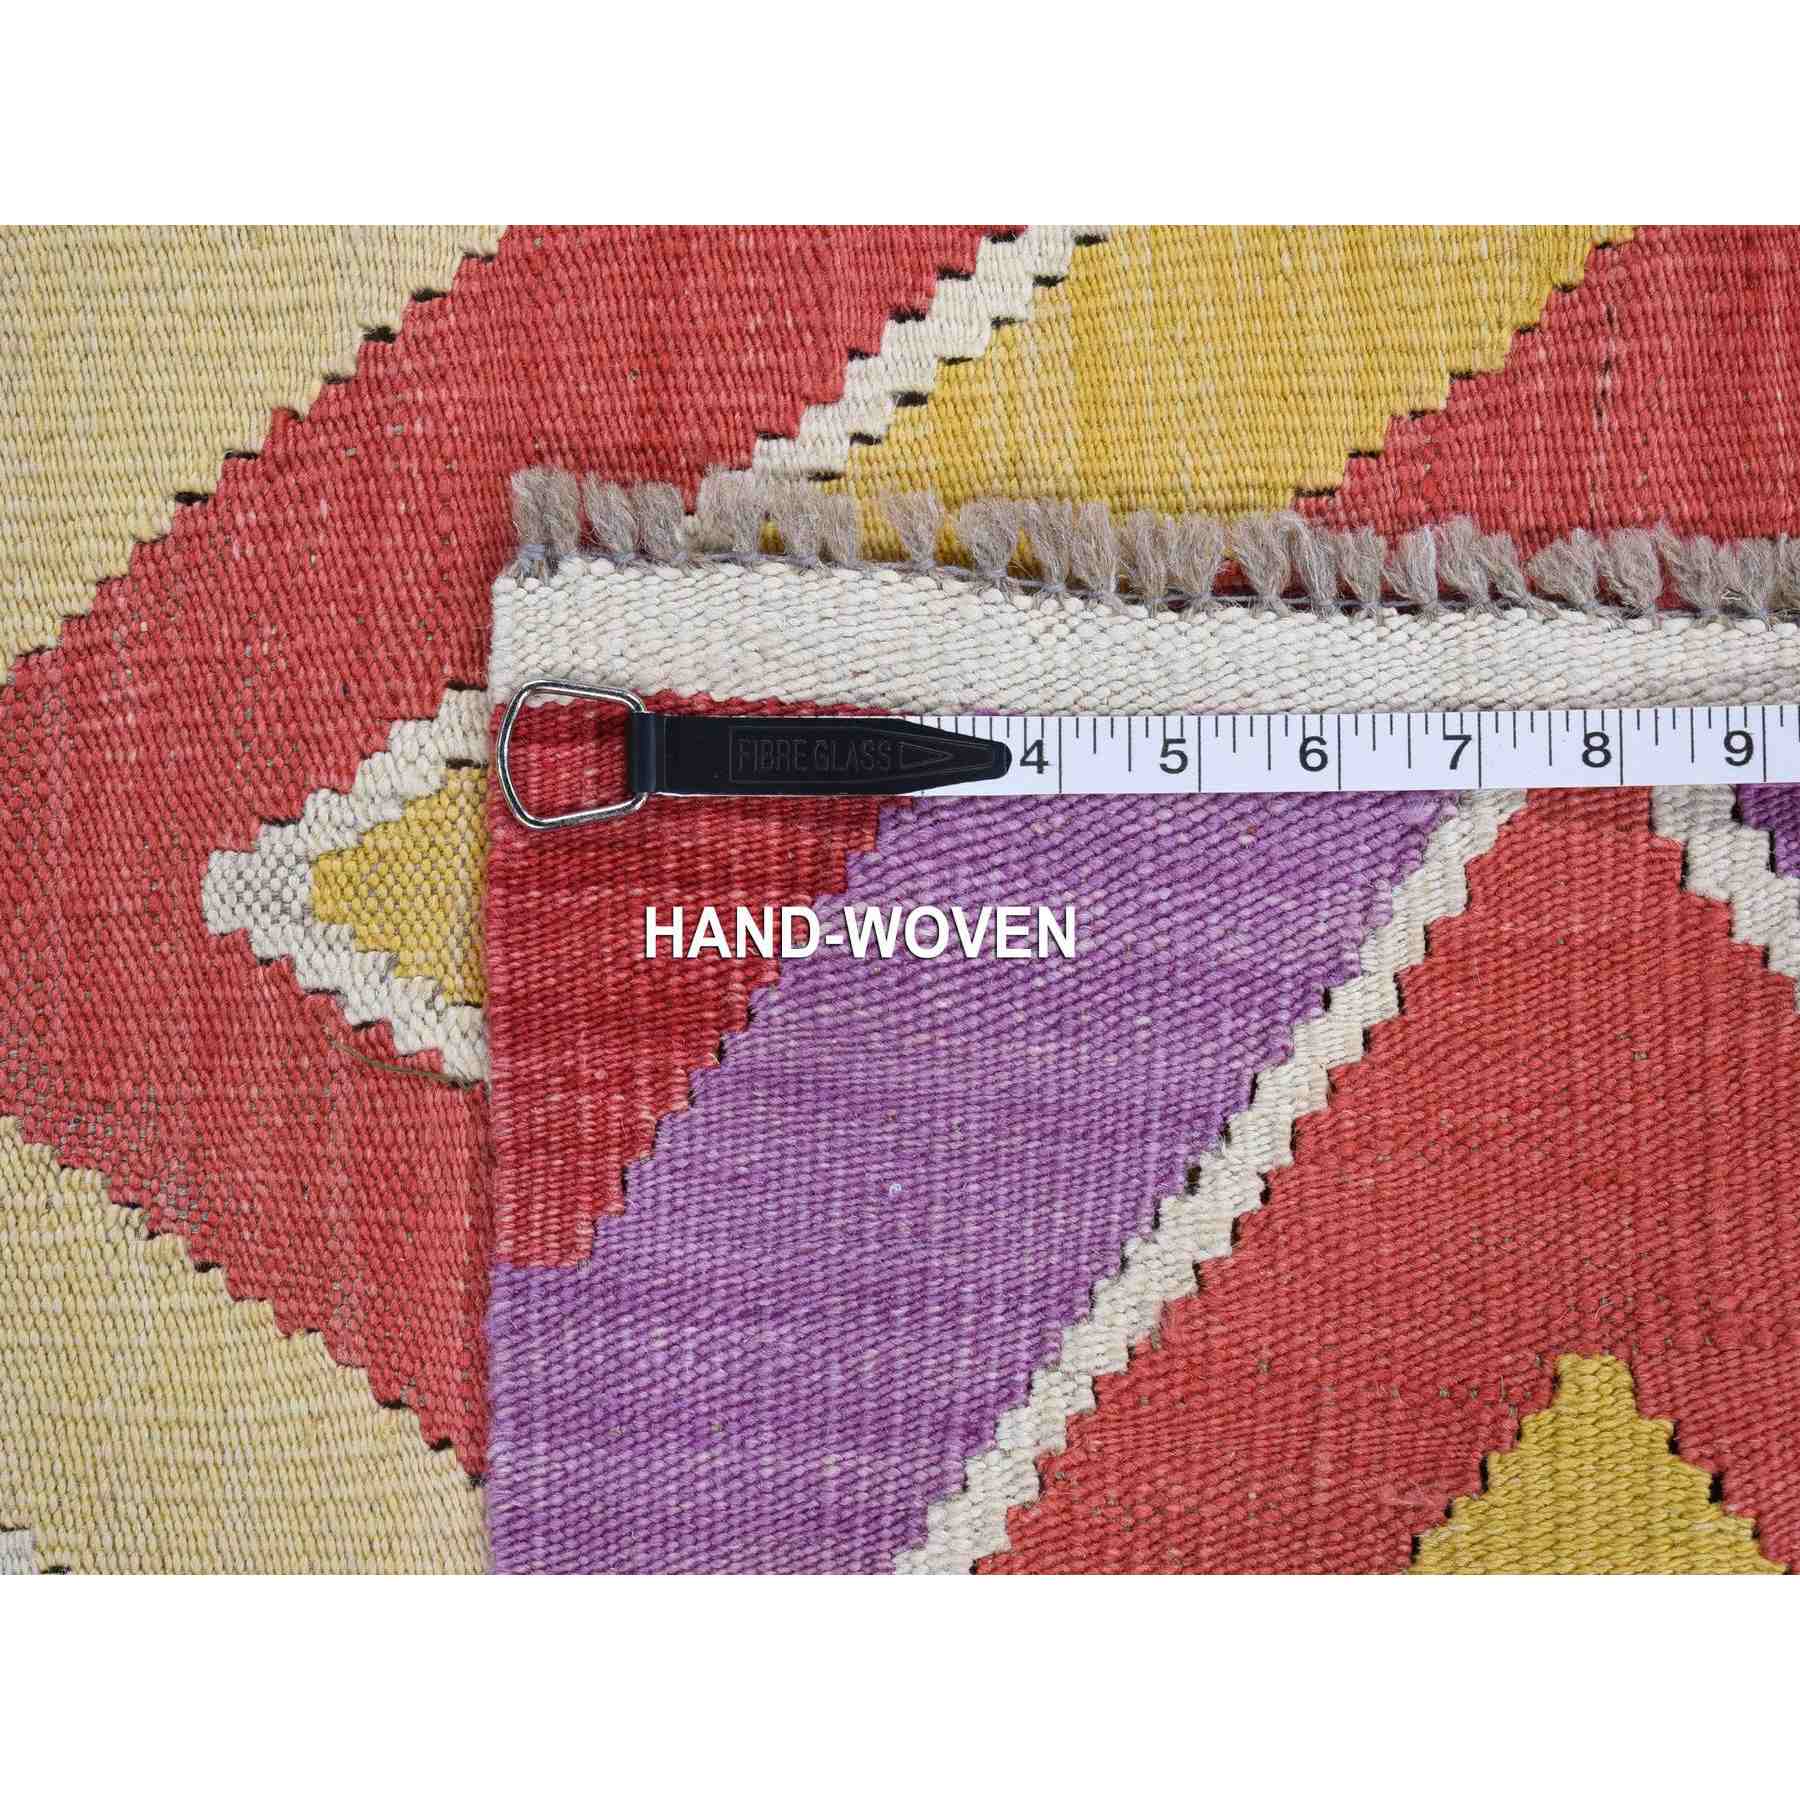 Flat-Weave-Hand-Woven-Rug-402740